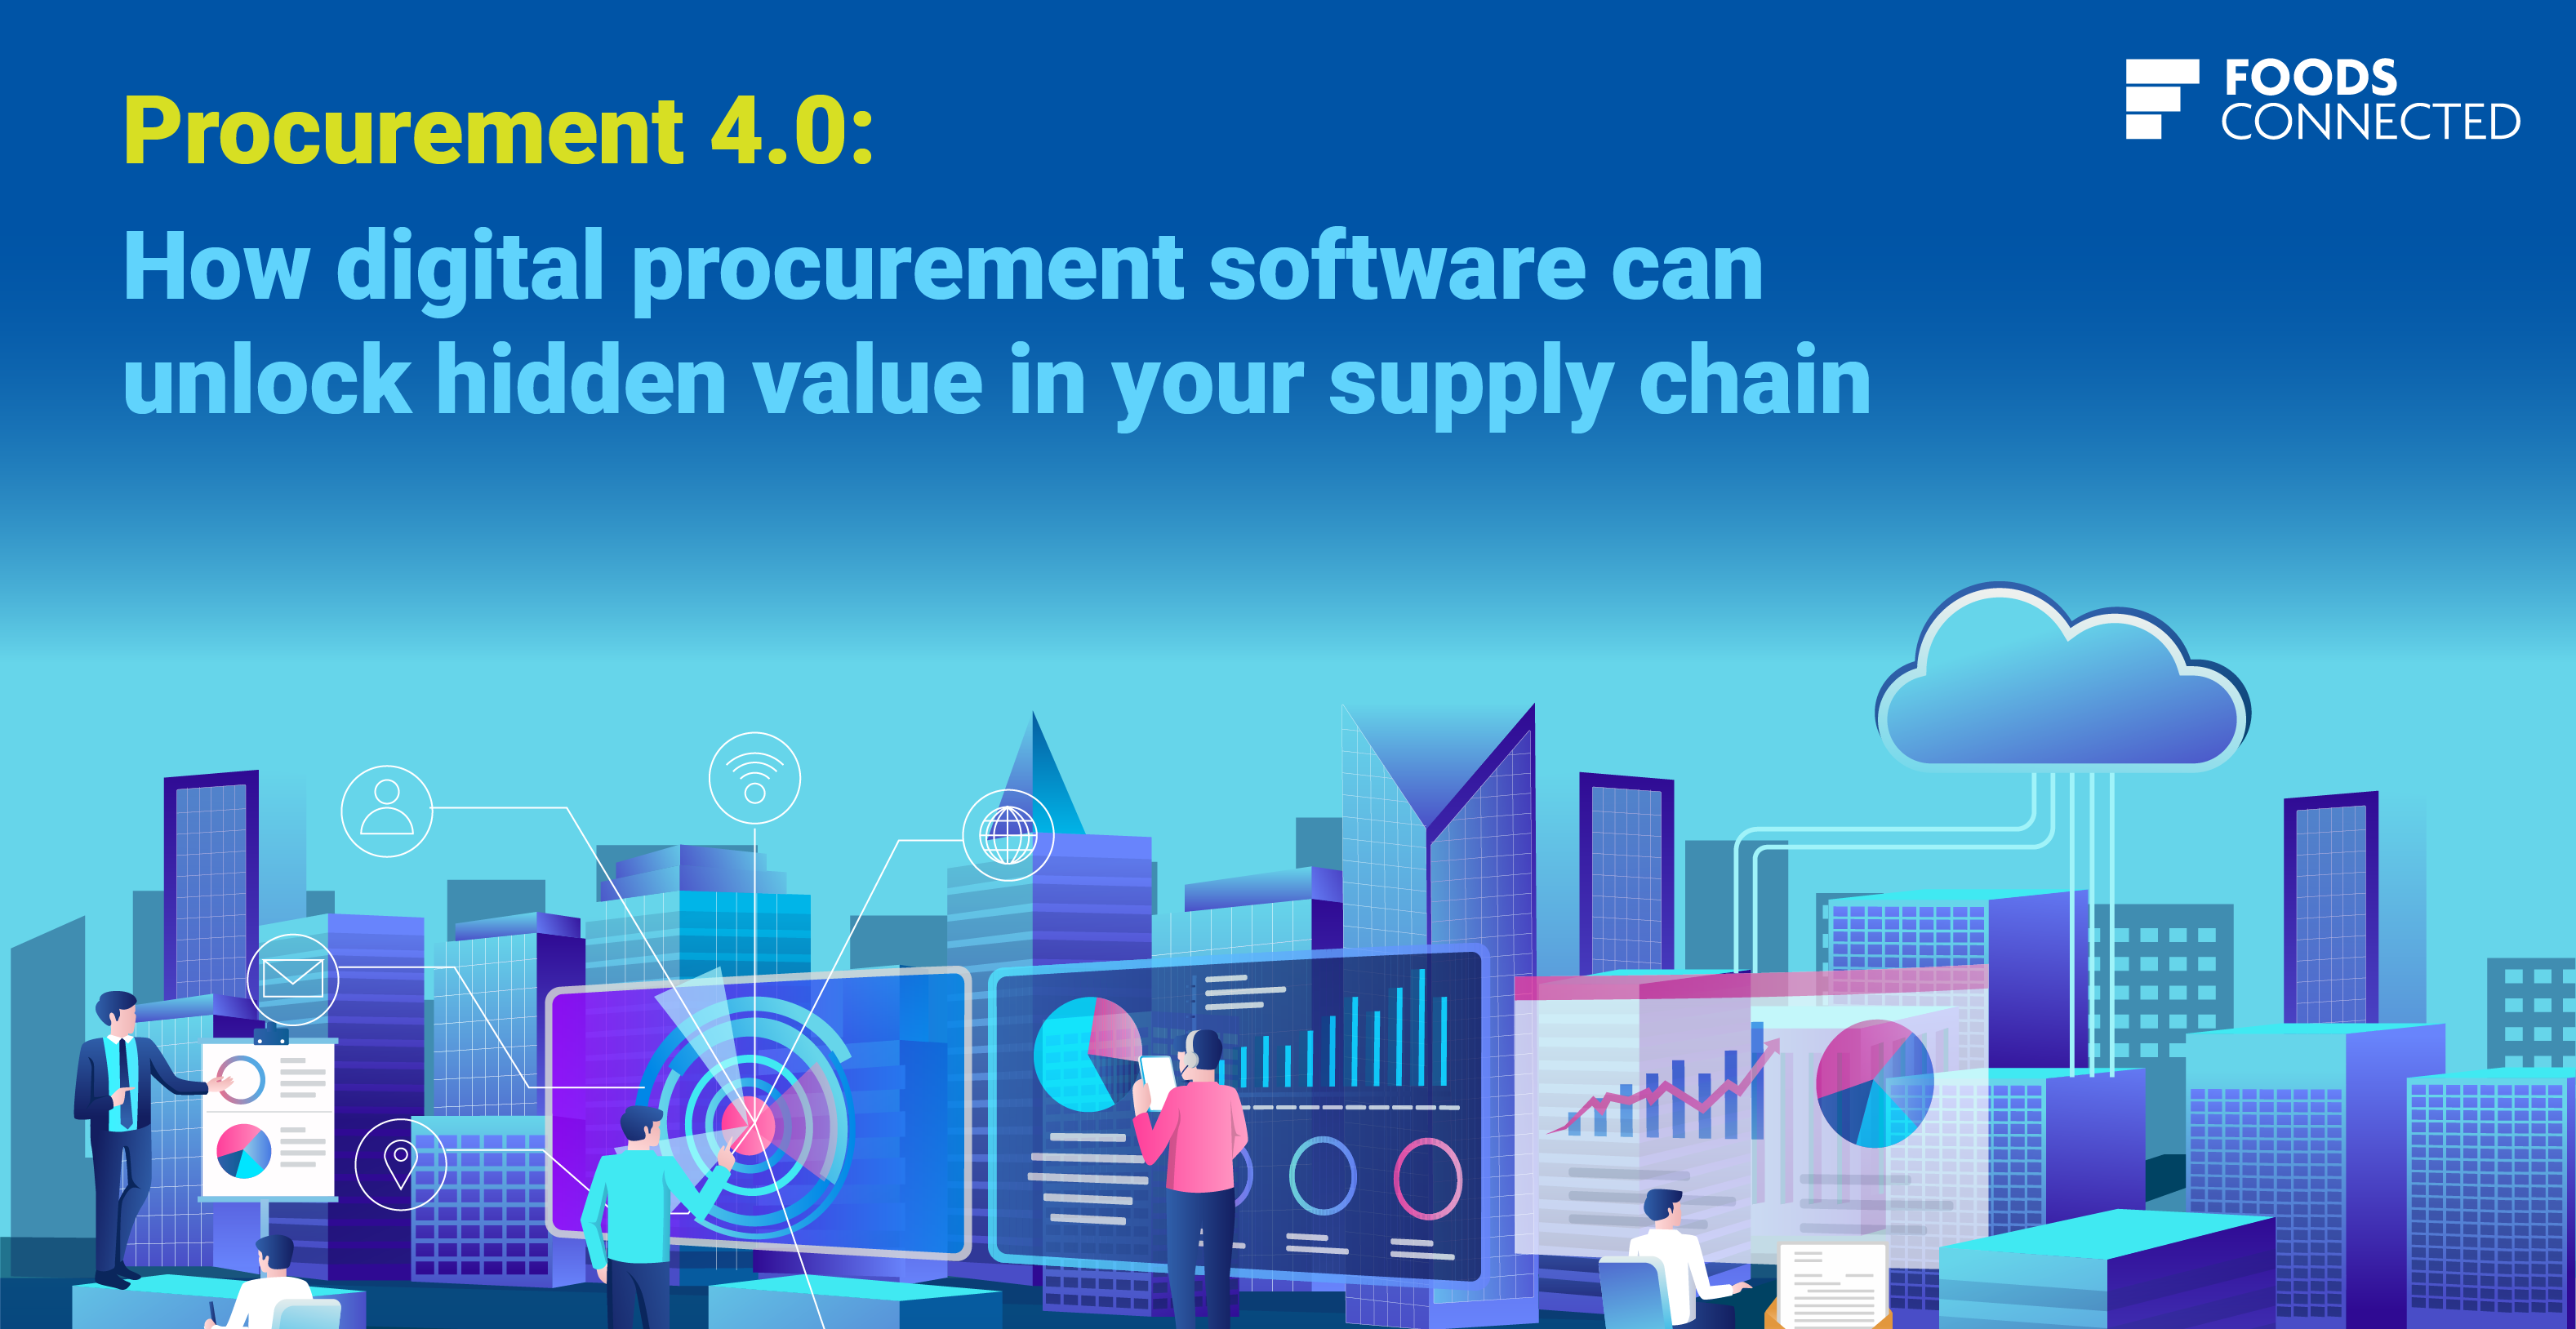 Procurement 4.0: How digital procurement software can unlock hidden value in your supply chain